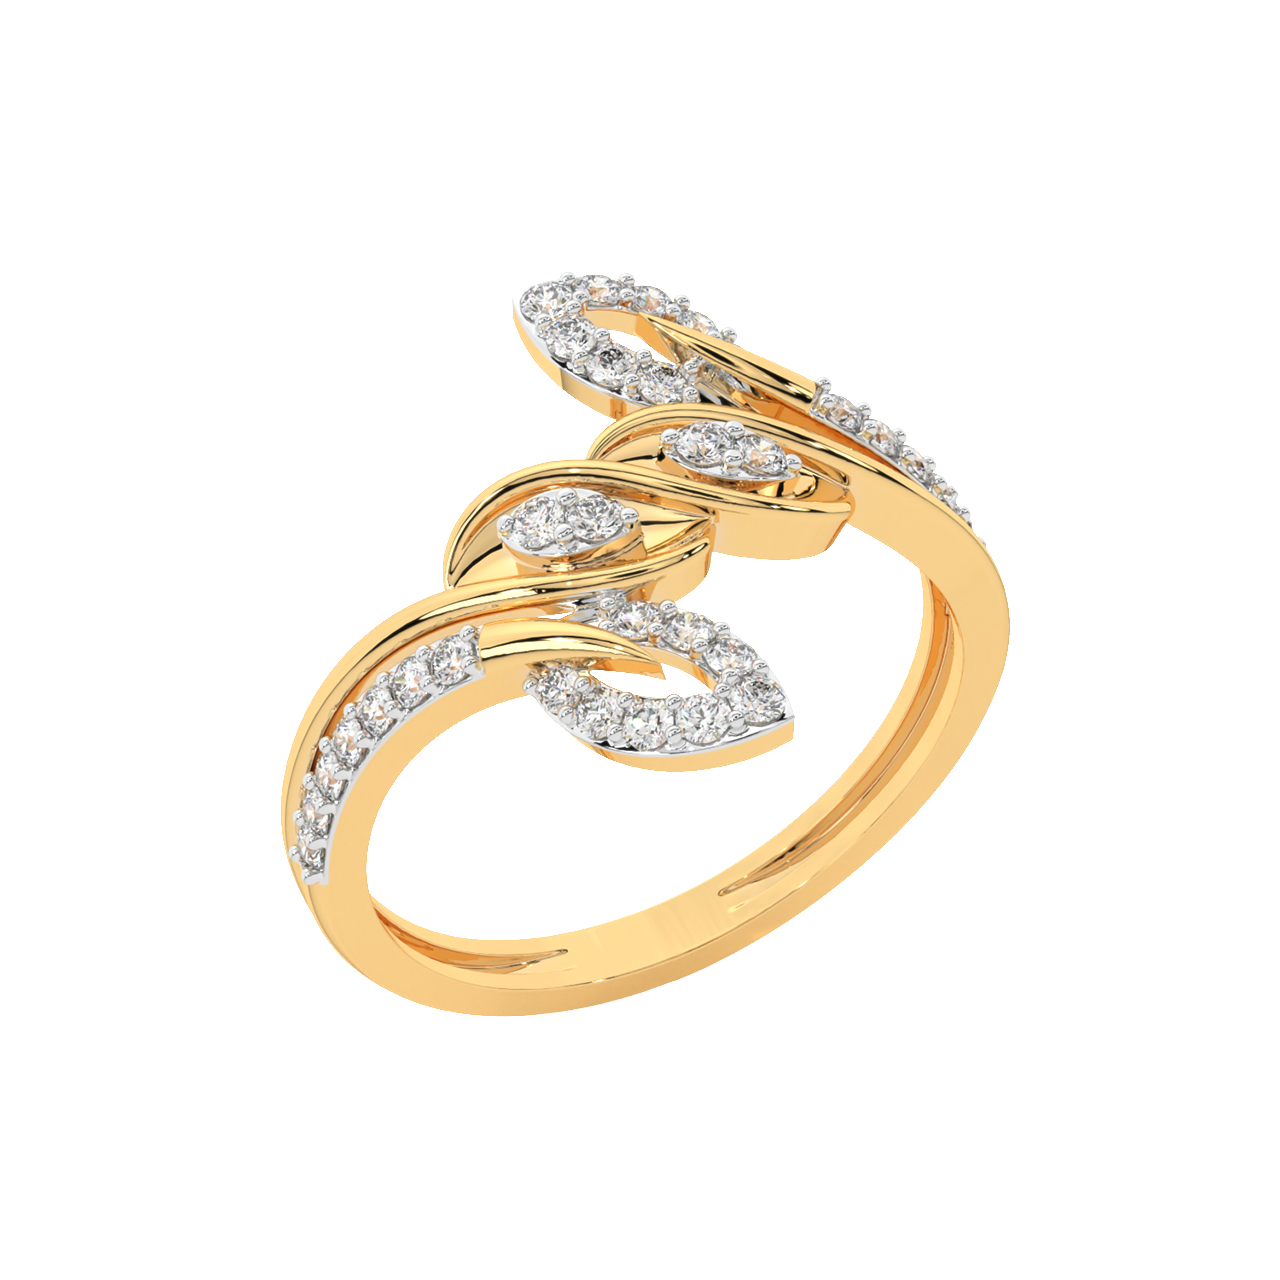 Carson Round Diamond Engagement Ring